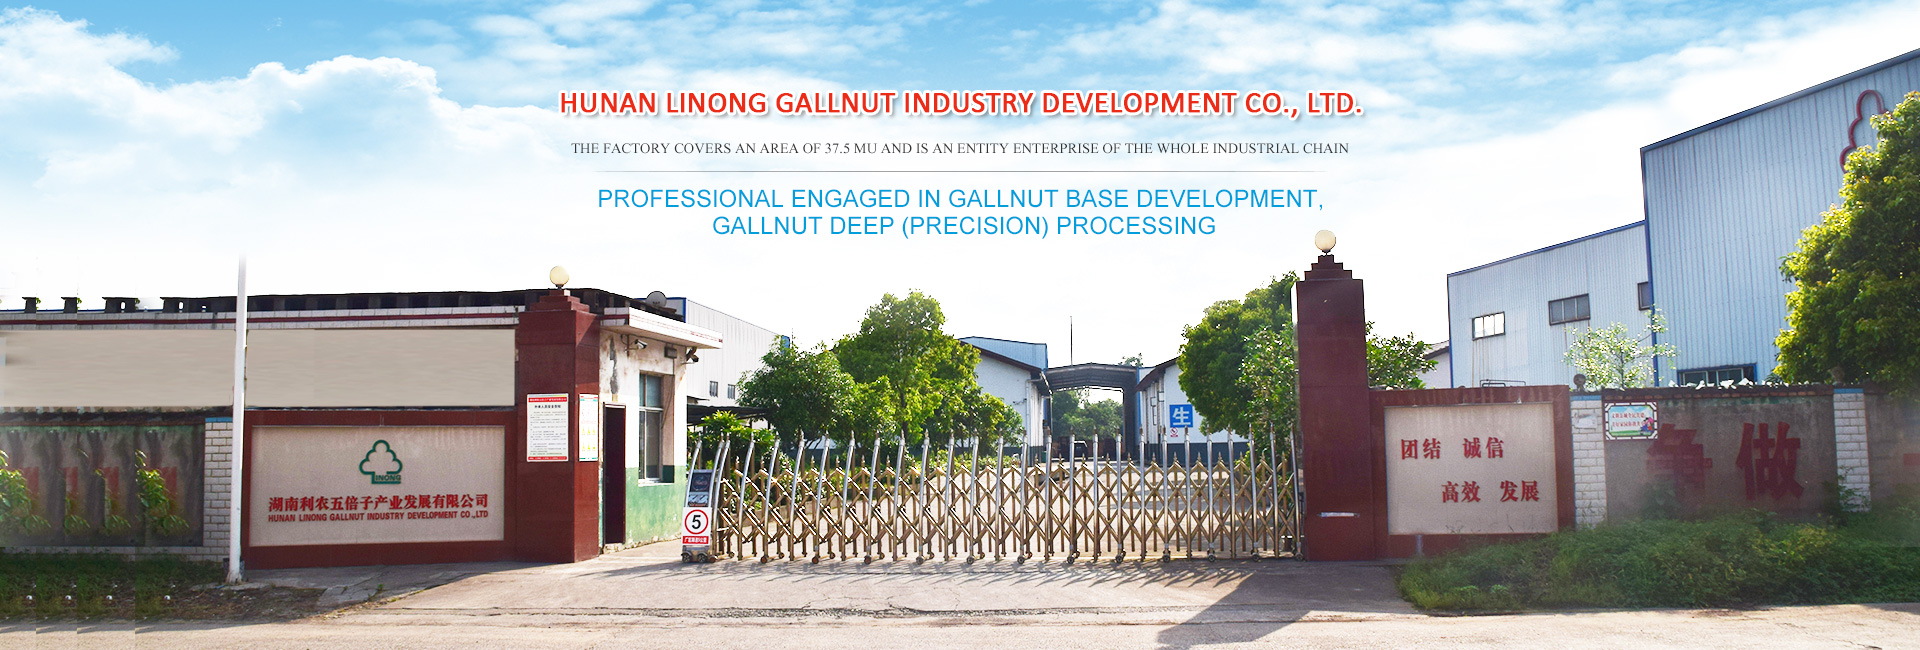 HUNAN LINONG GALLNUT INDUSTRY DEVELOPMENT CO., LTD. _HUNAN GALLNUT DEEP (PRECISION) PROCESSING 